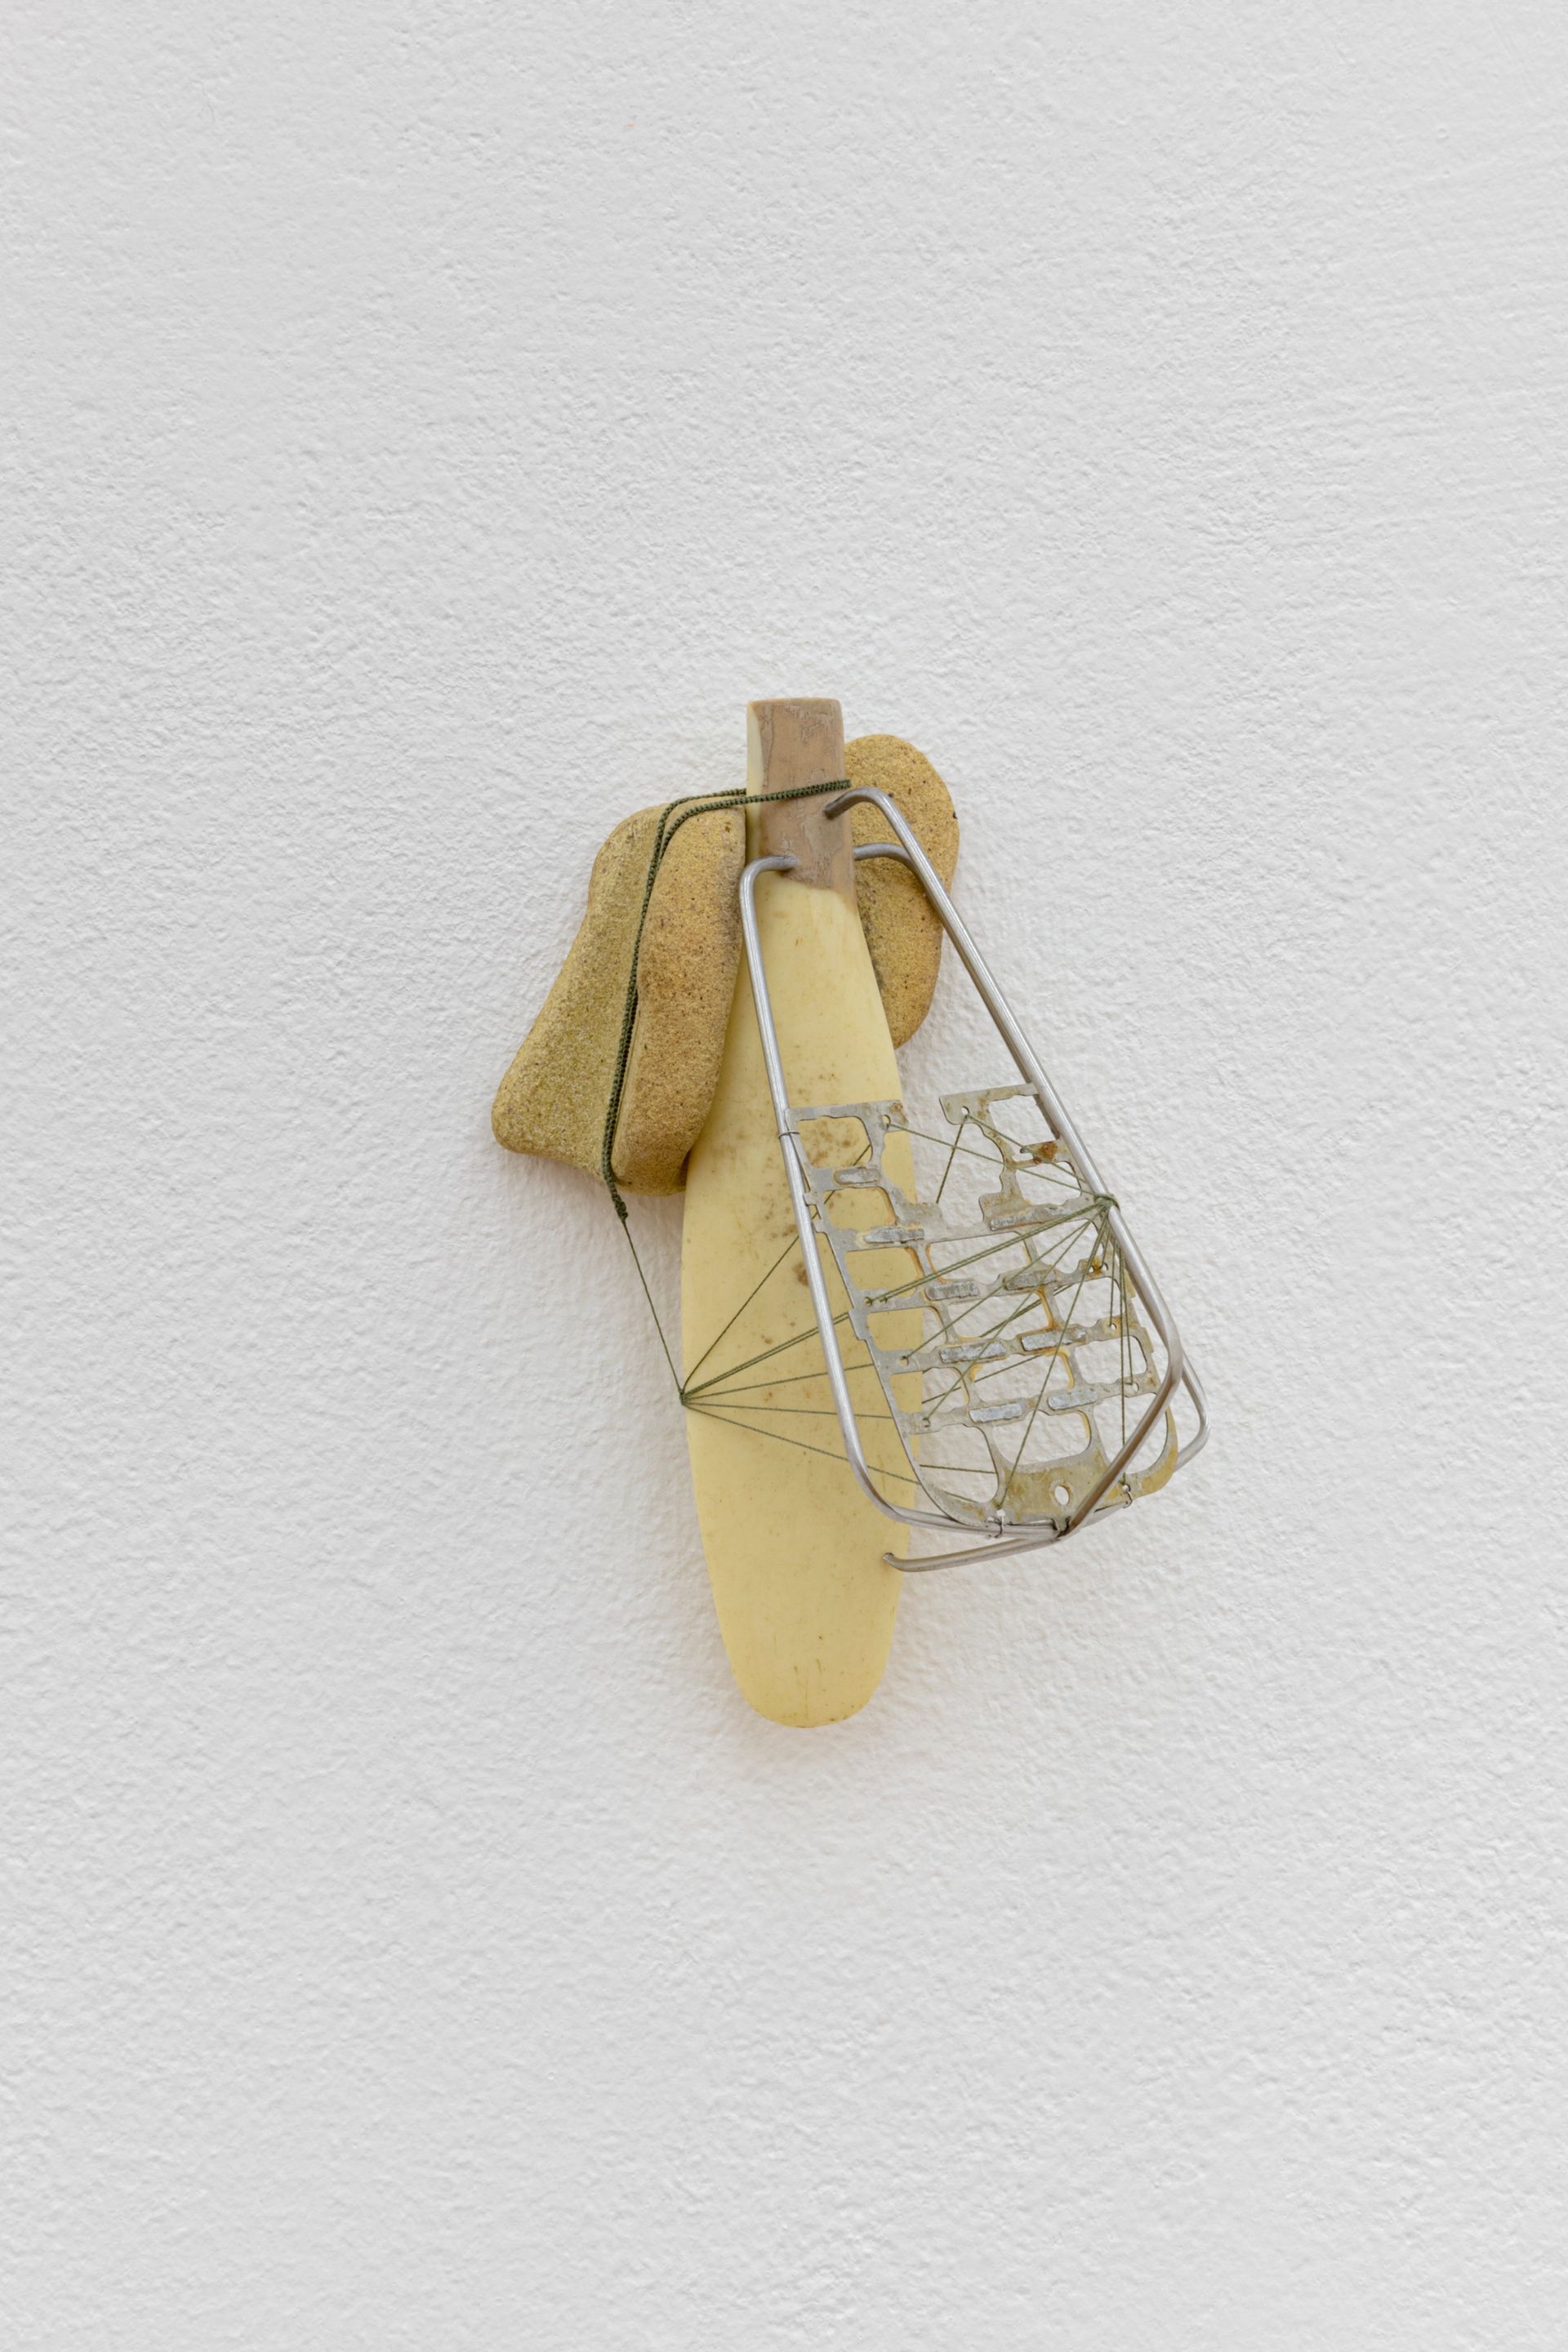 David Fesl, Untitled, 2022, sea mineral, kitchen utensil handle, blender whisk, mobile phone keyboard, silk thread,10.9 × 7.2 × 5.3 cm, photo: Sebastian Kissel